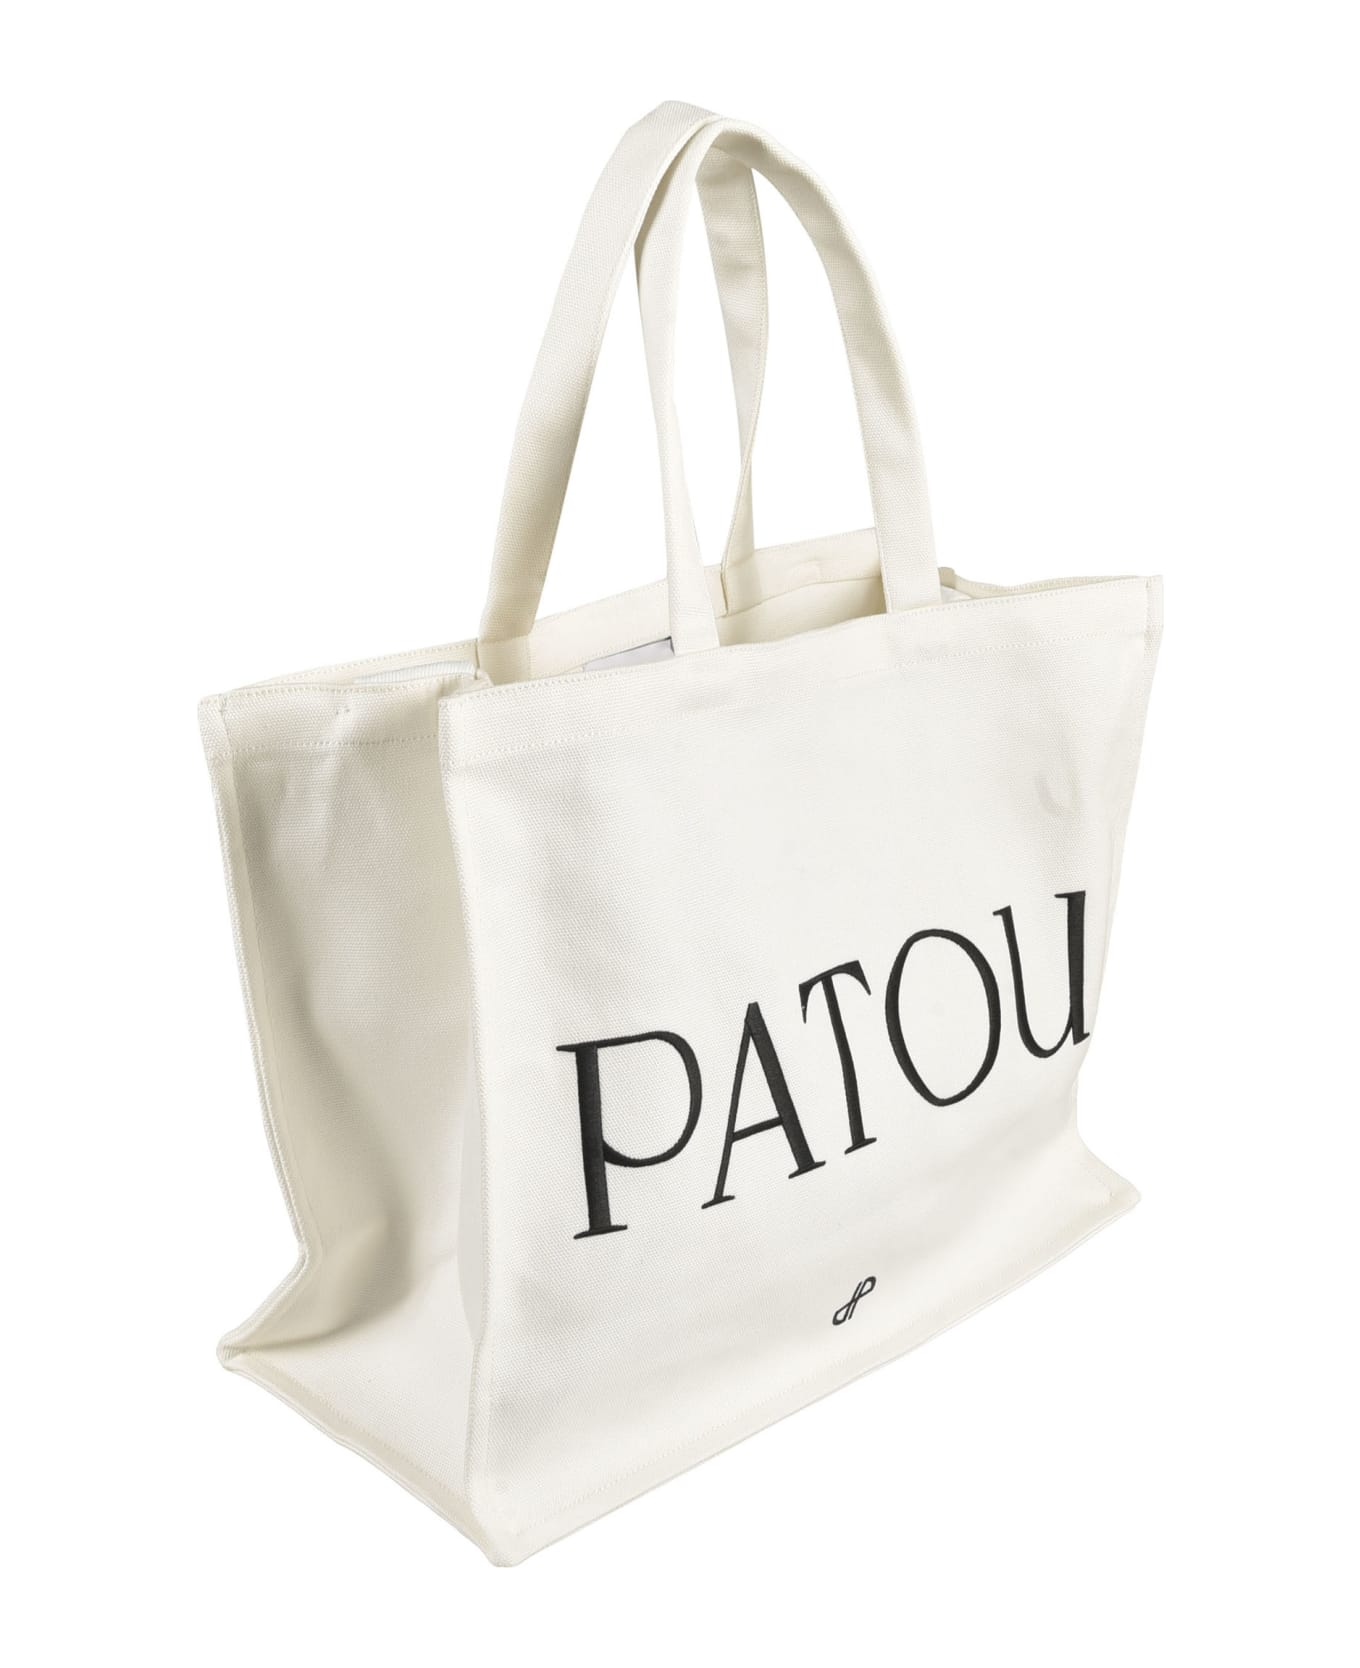 Patou Logo Large Tote - WHITE トートバッグ